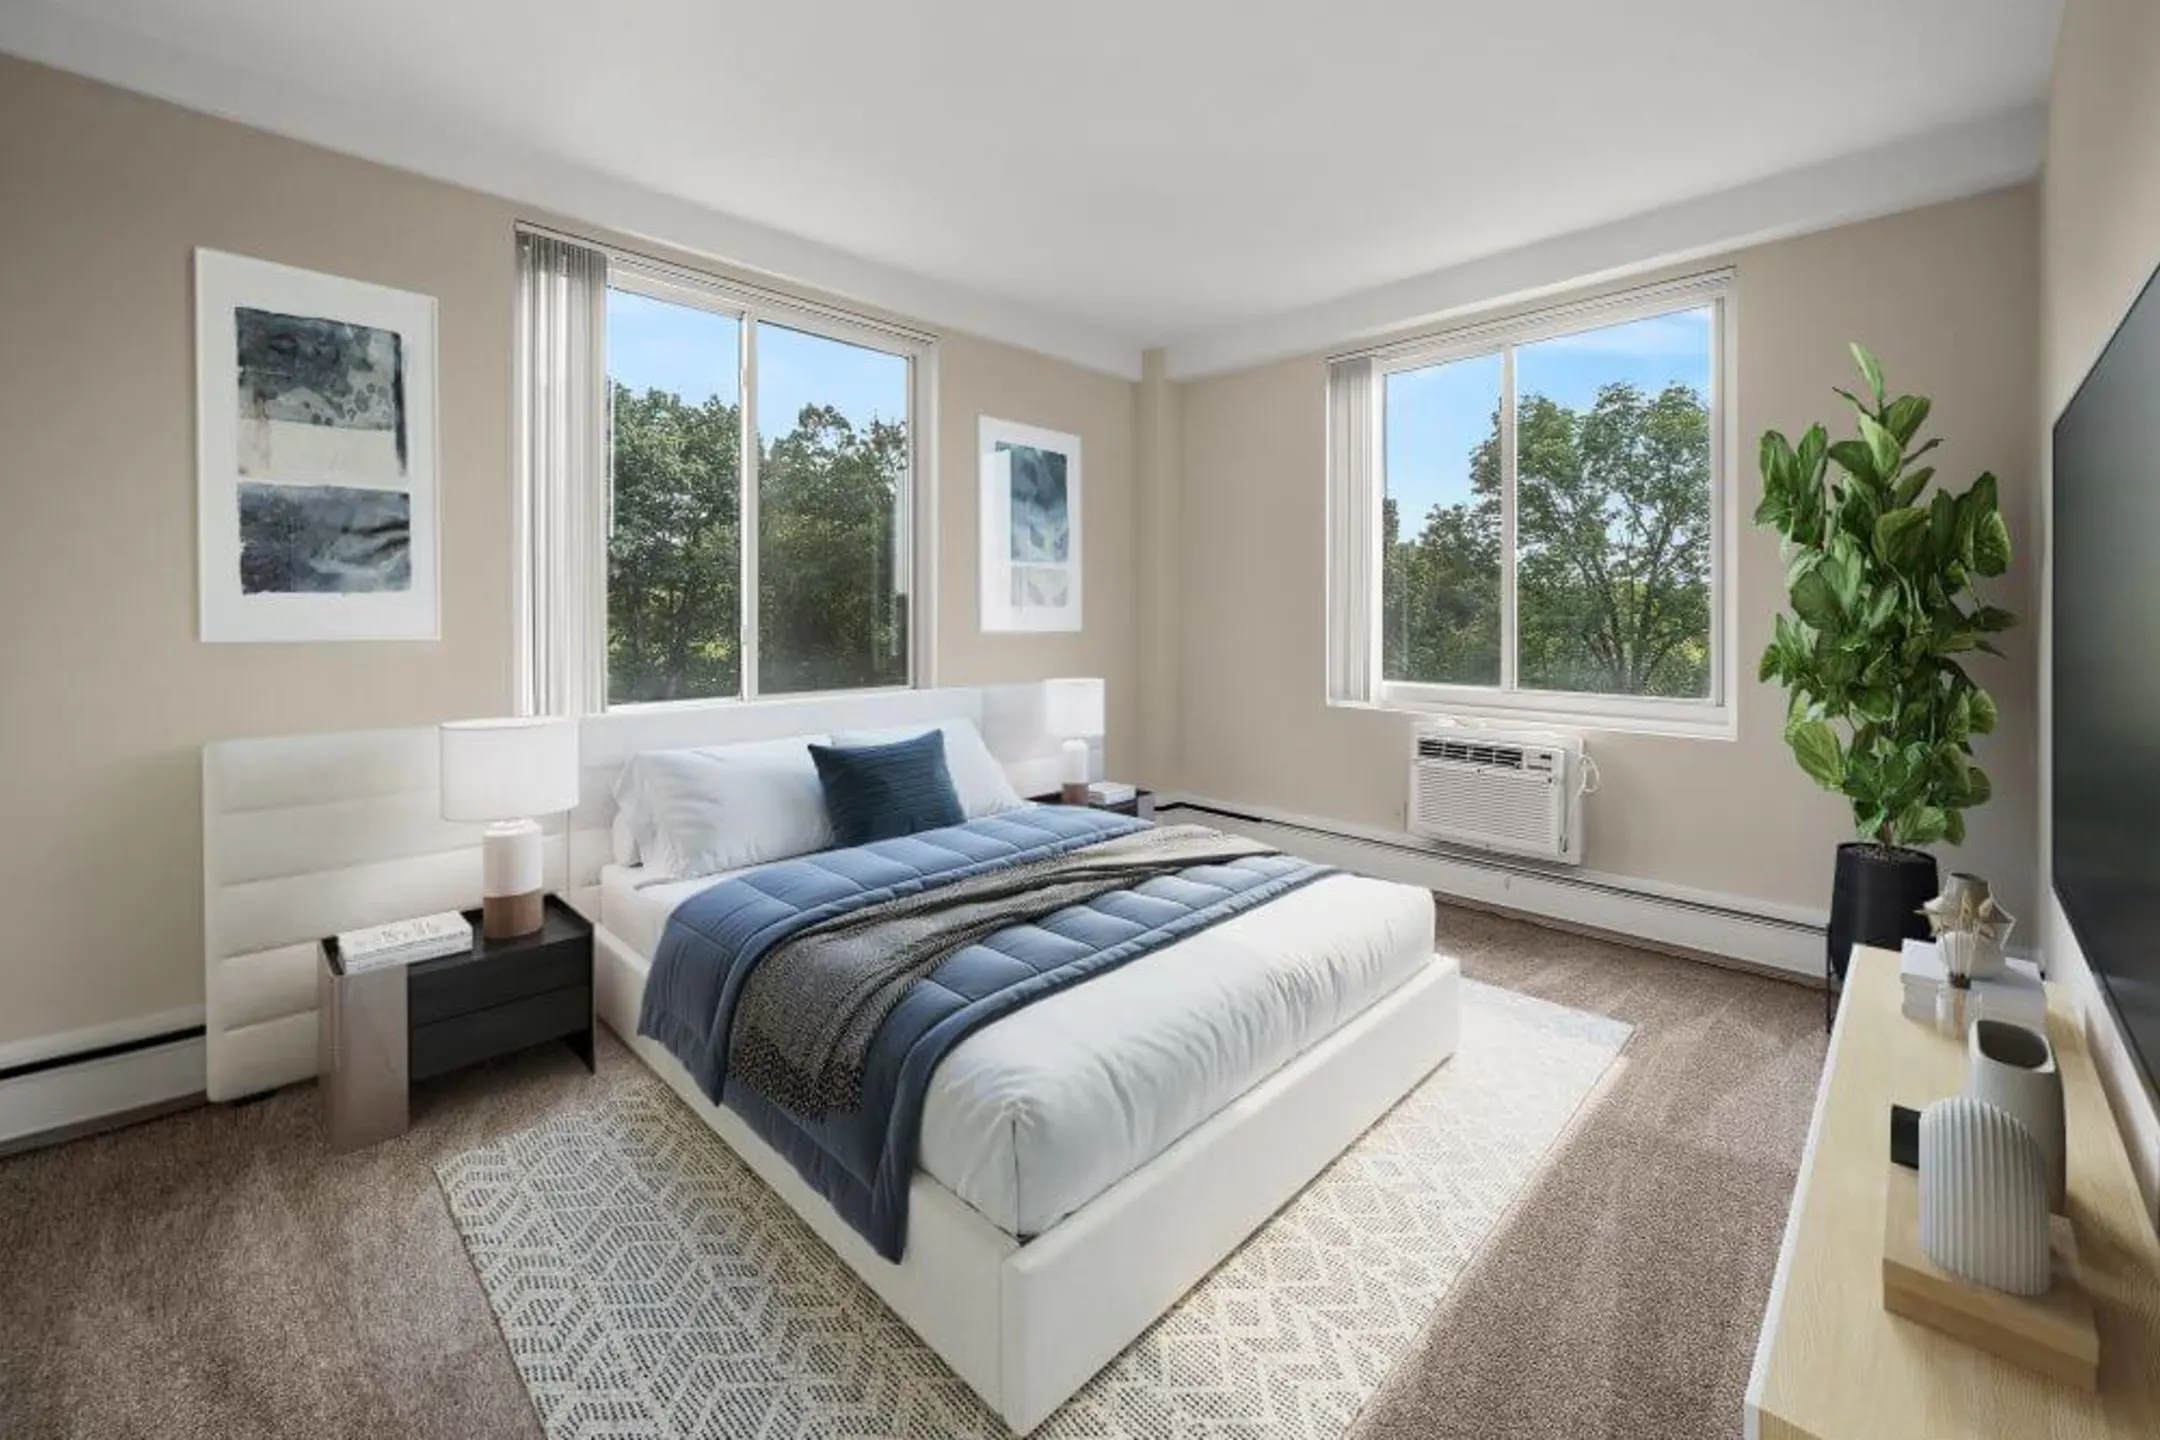 Bedroom - 100 York - Jenkintown, PA